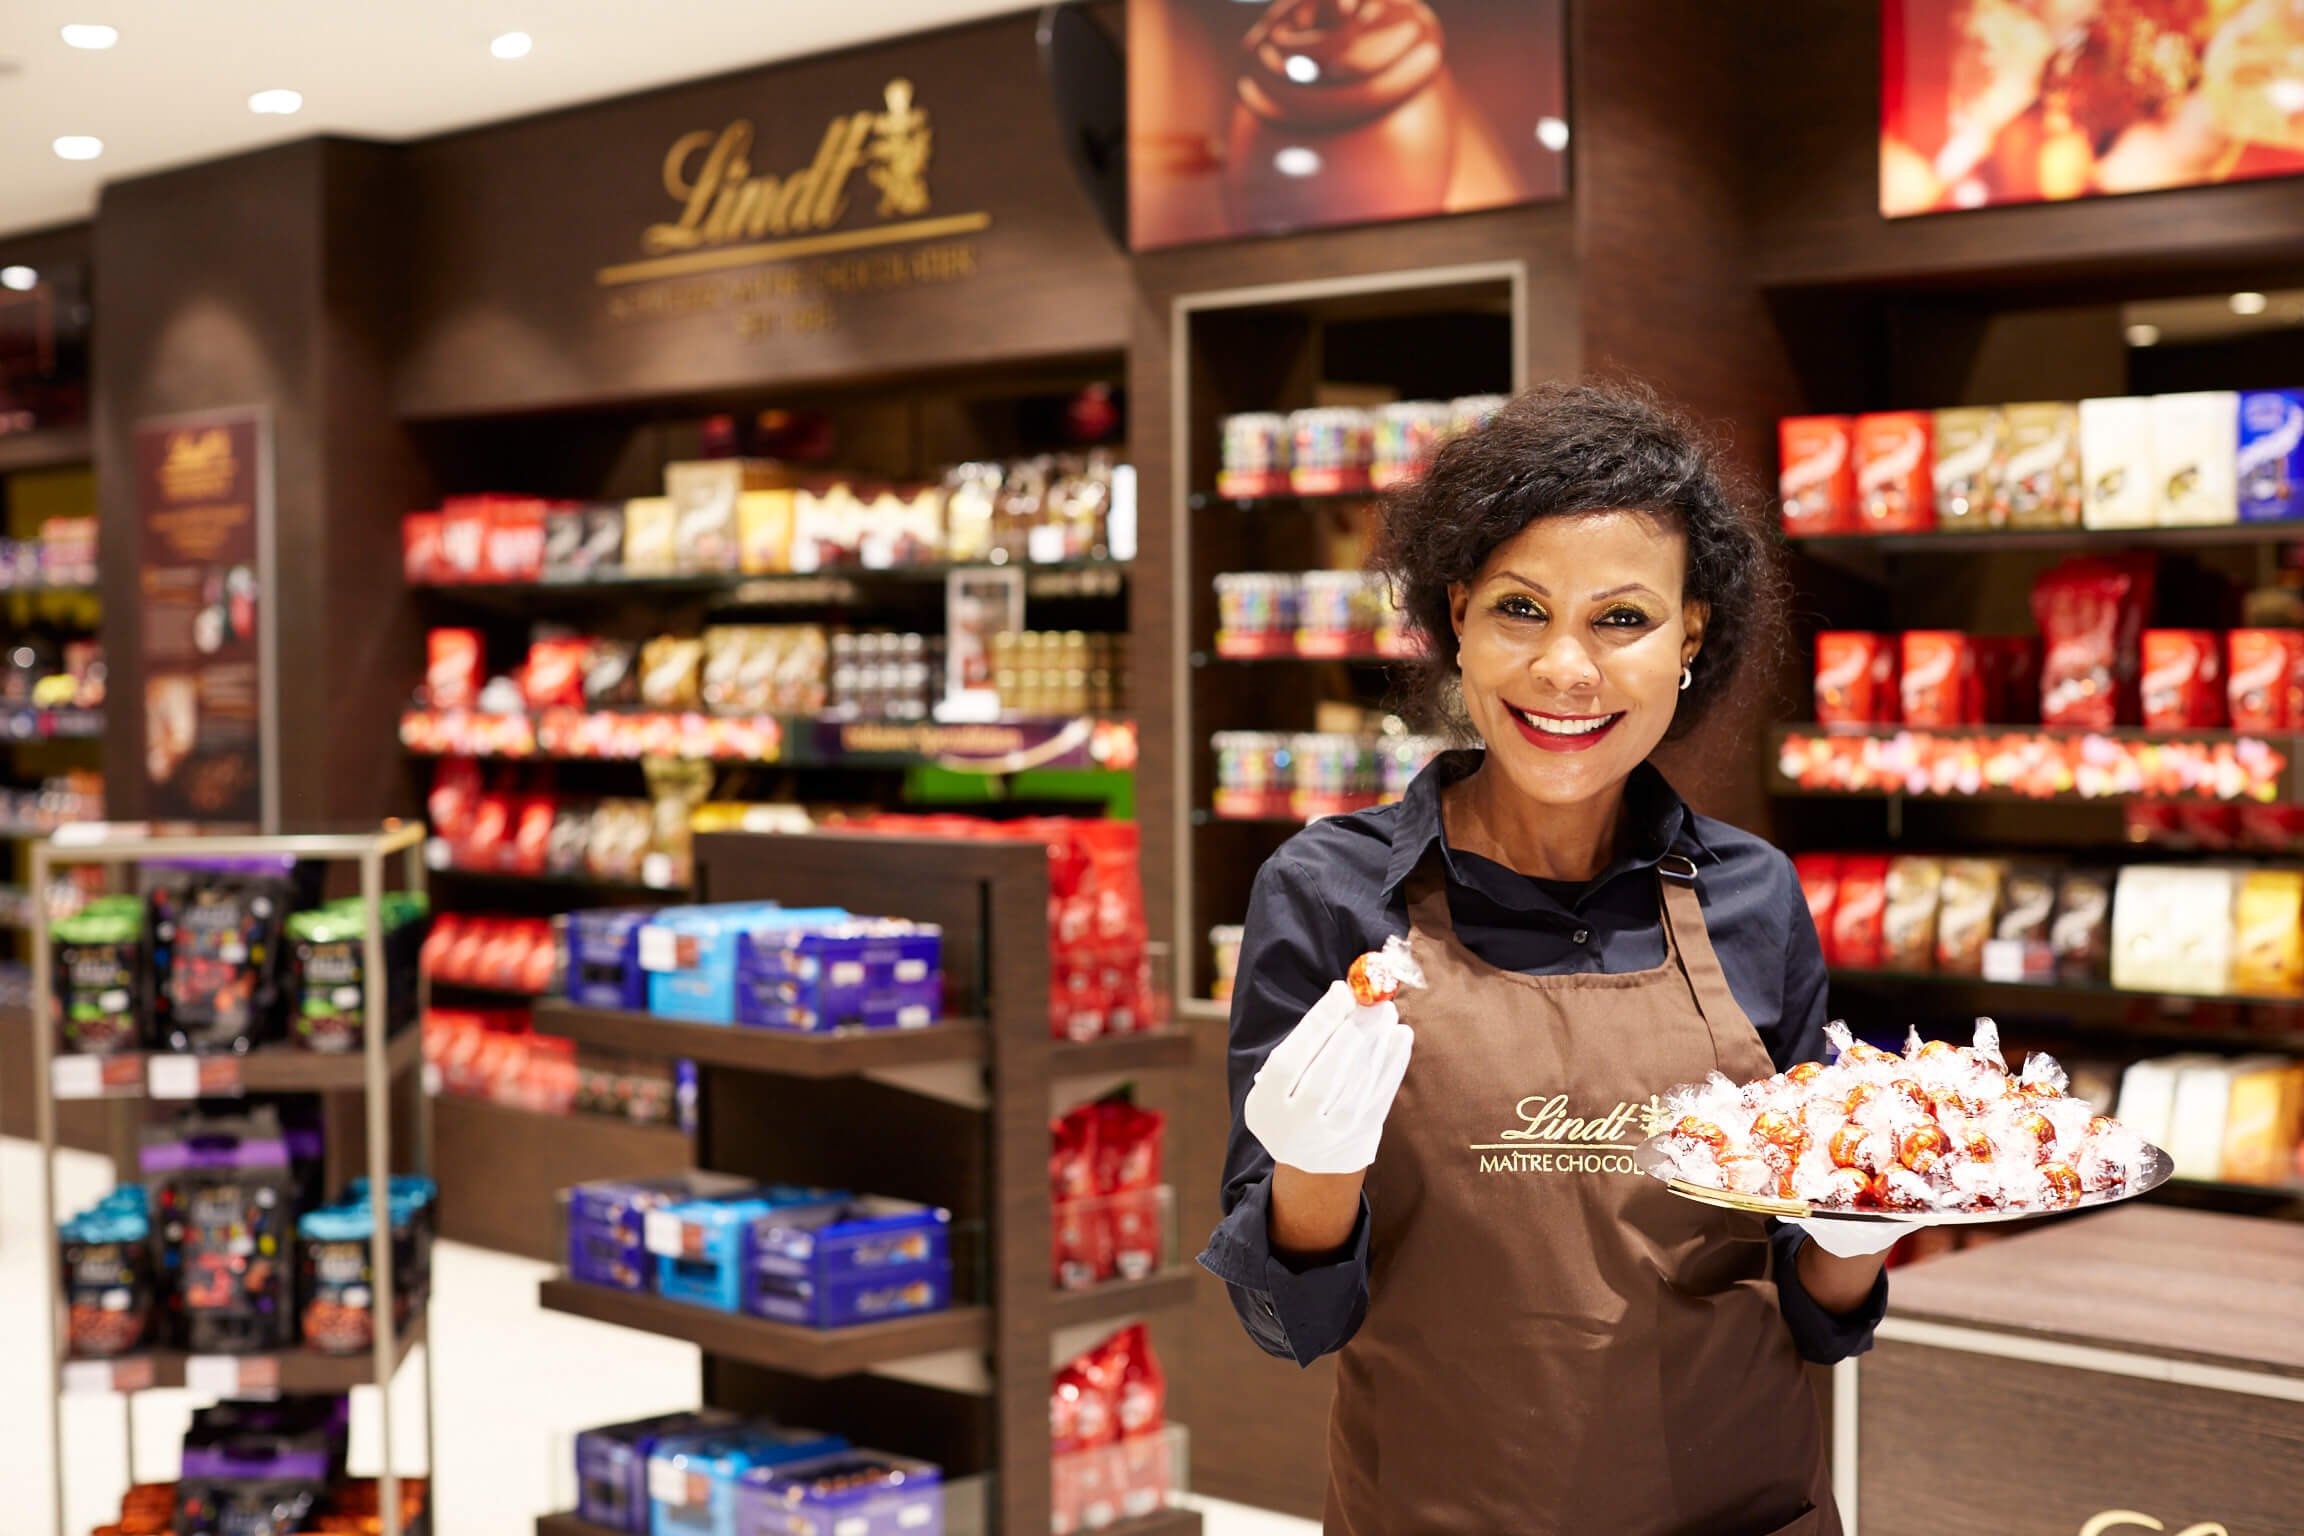 Verkäuferin in Lindt-Geschäft, bietet Schokolade an